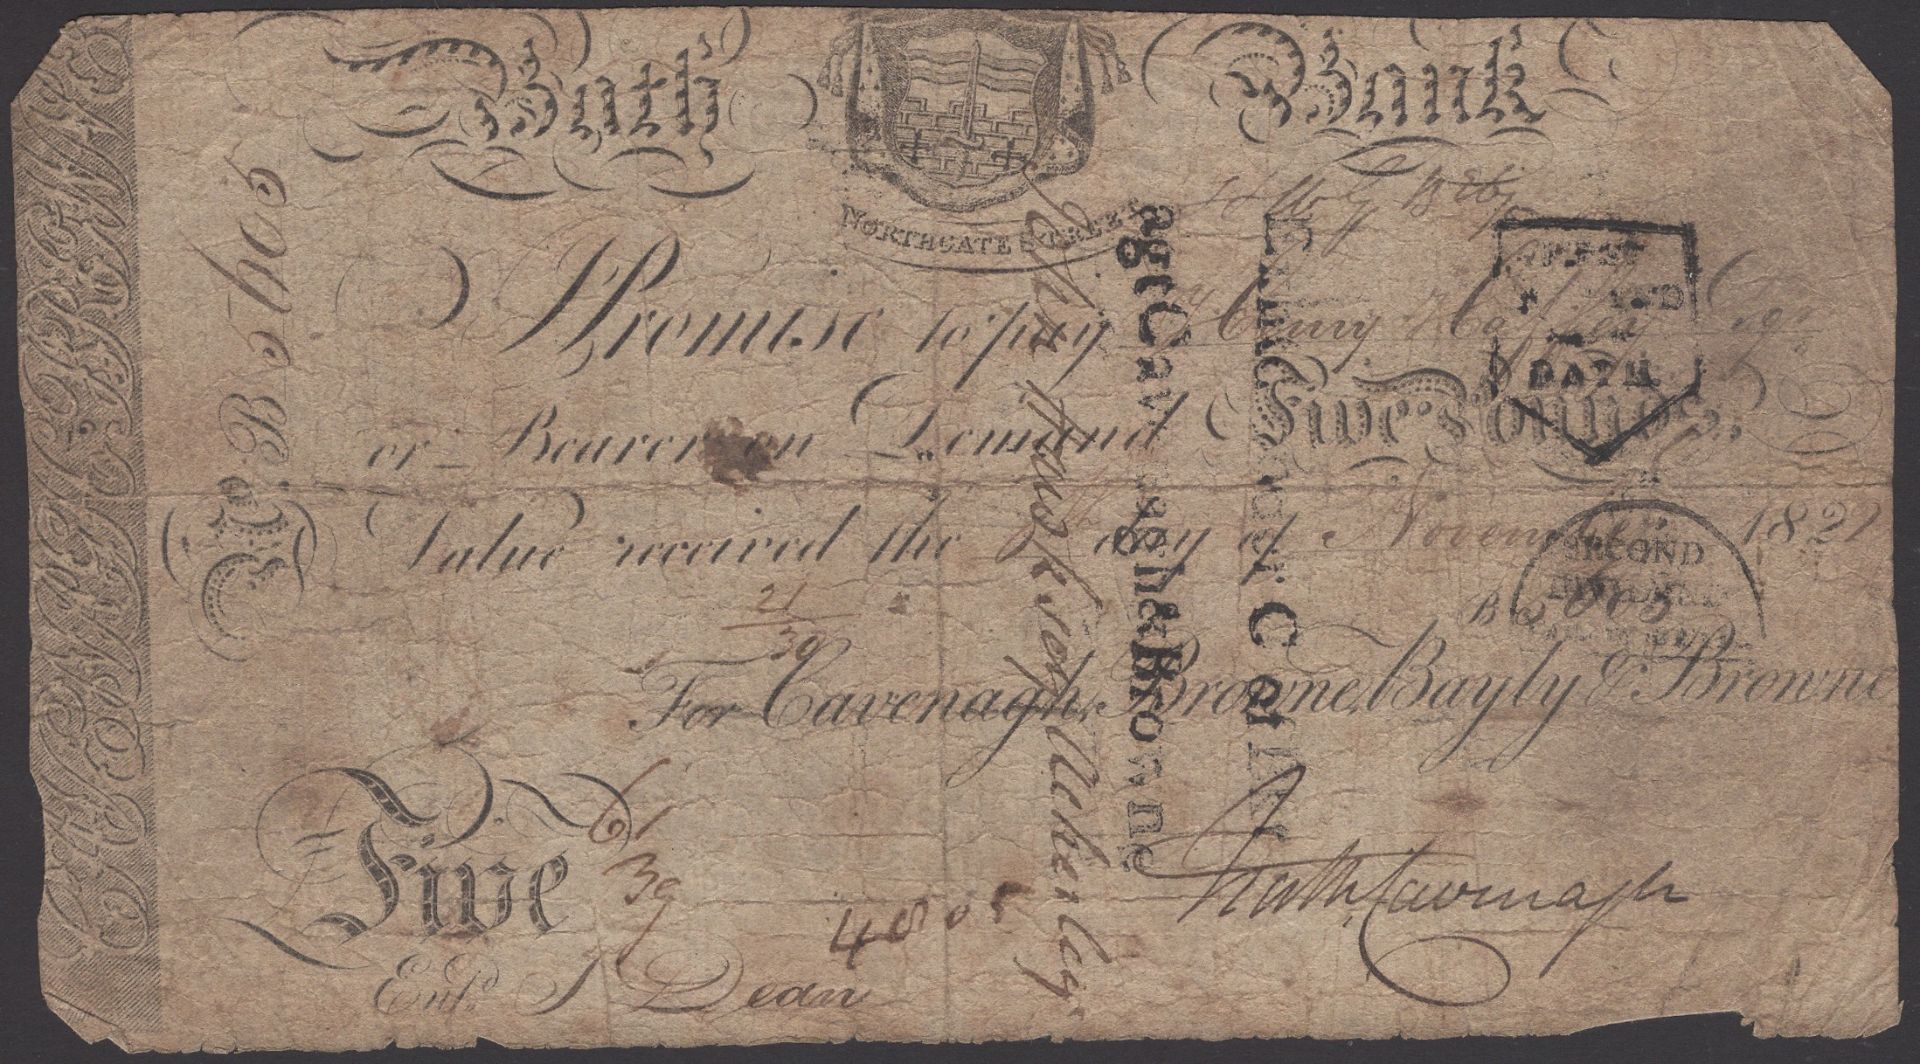 Bath Bank, for Cavenagh, Browne, Bayly and Browne, Â£5, 6 November 1822, serial number B5605,...